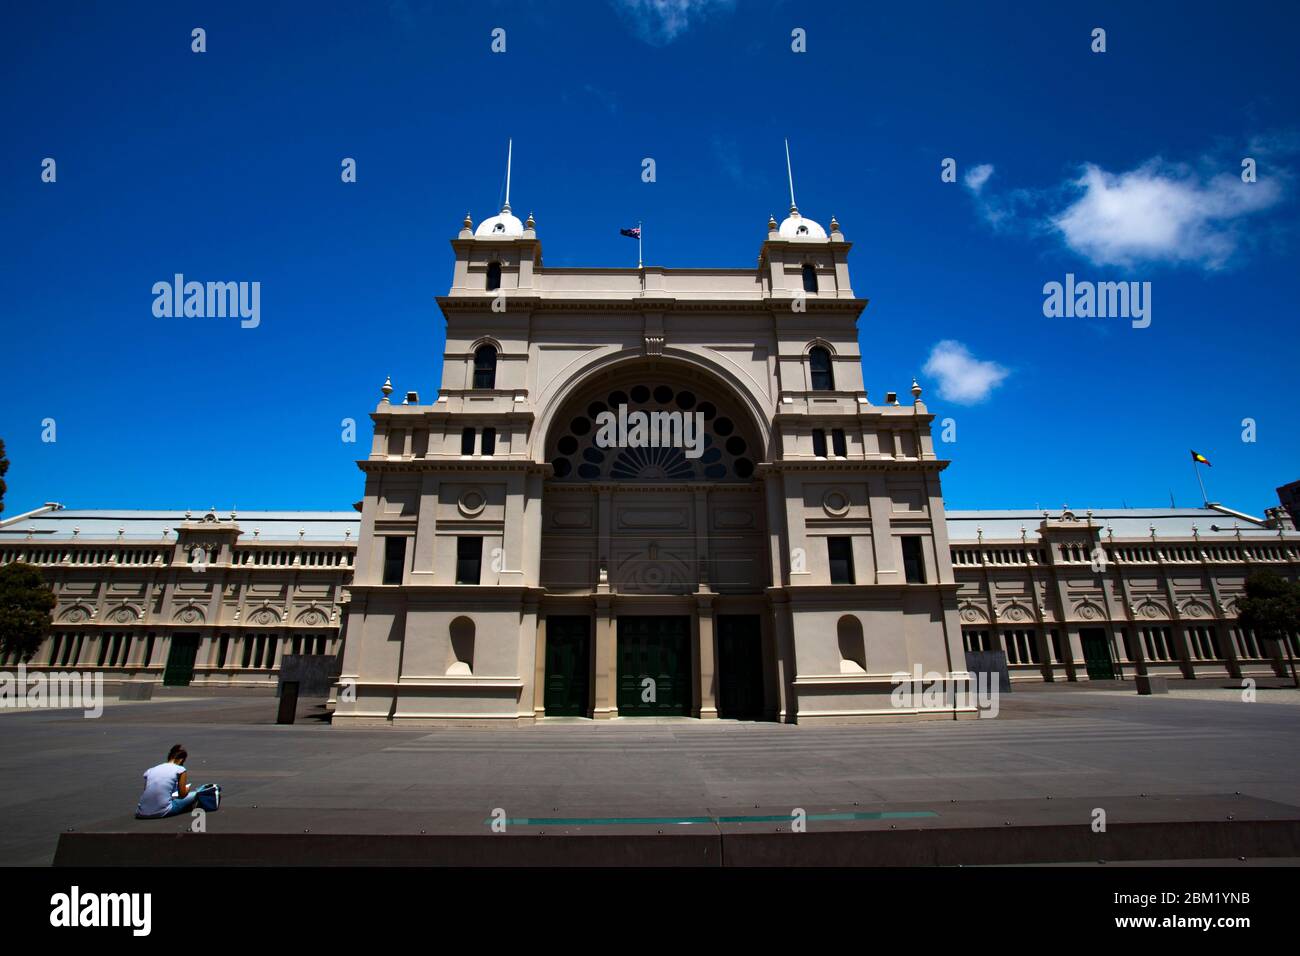 Royal Exhibition Building, Melbourne, Australia - the first building in Australia to achieve UNESCO World Heritage status. Stock Photo